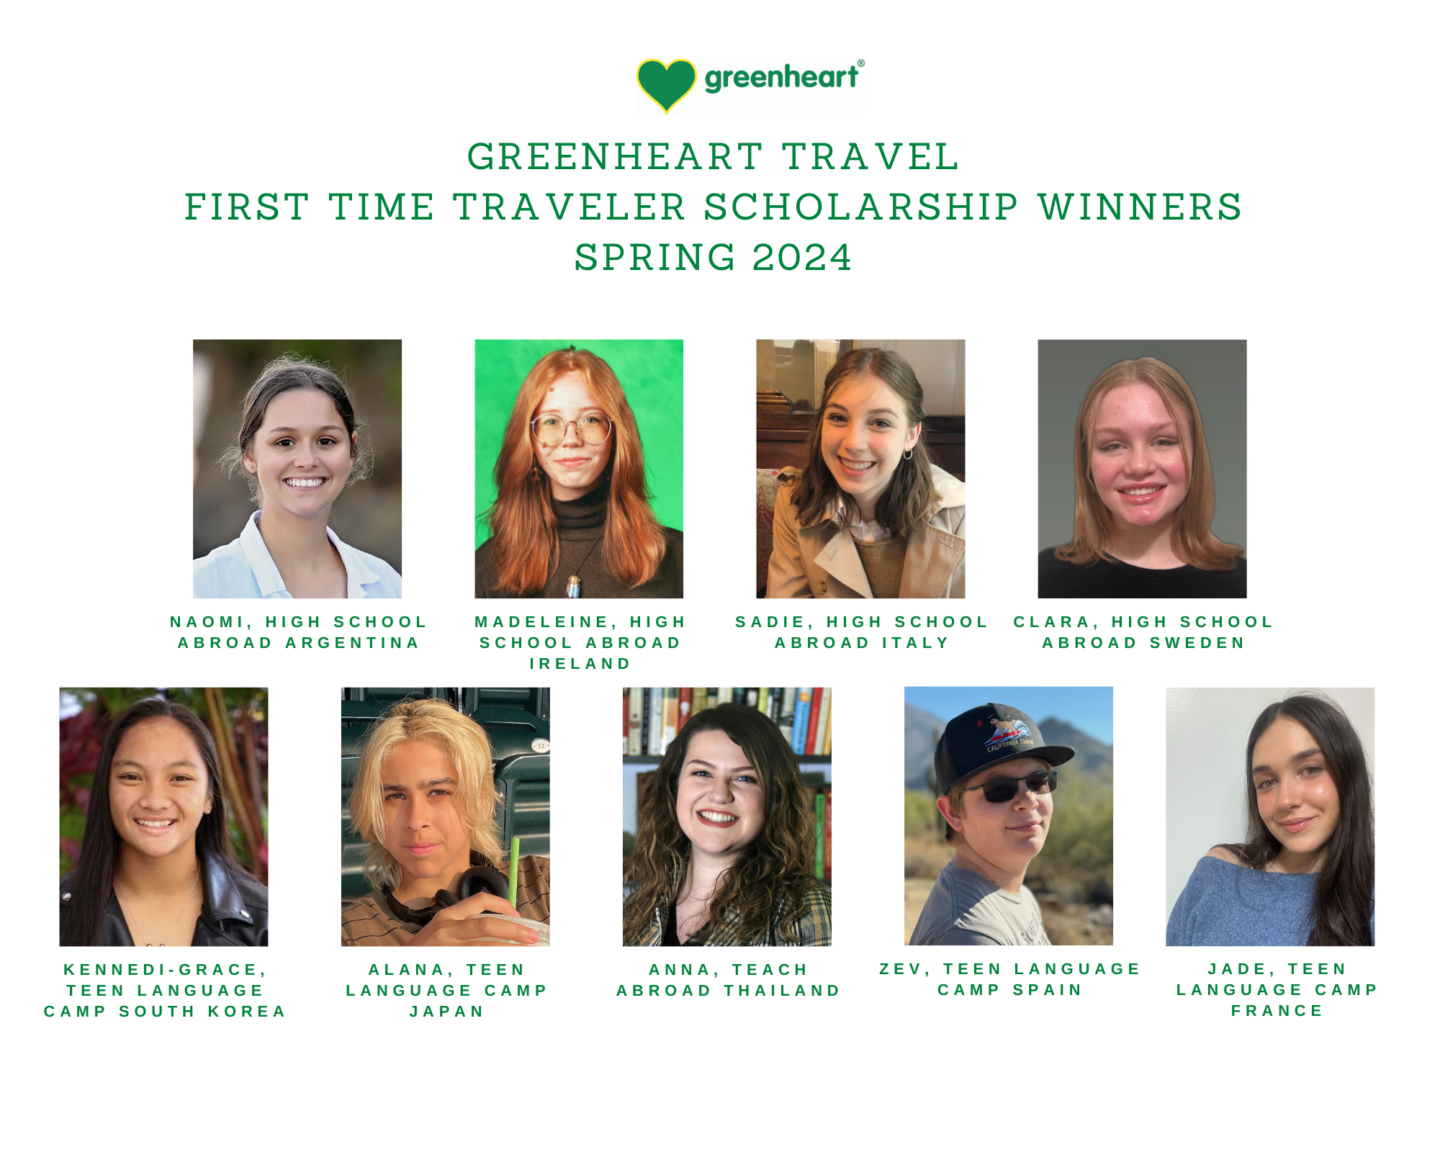 Greenheart’s First Time Traveler Scholarship Winners for Spring 2024!